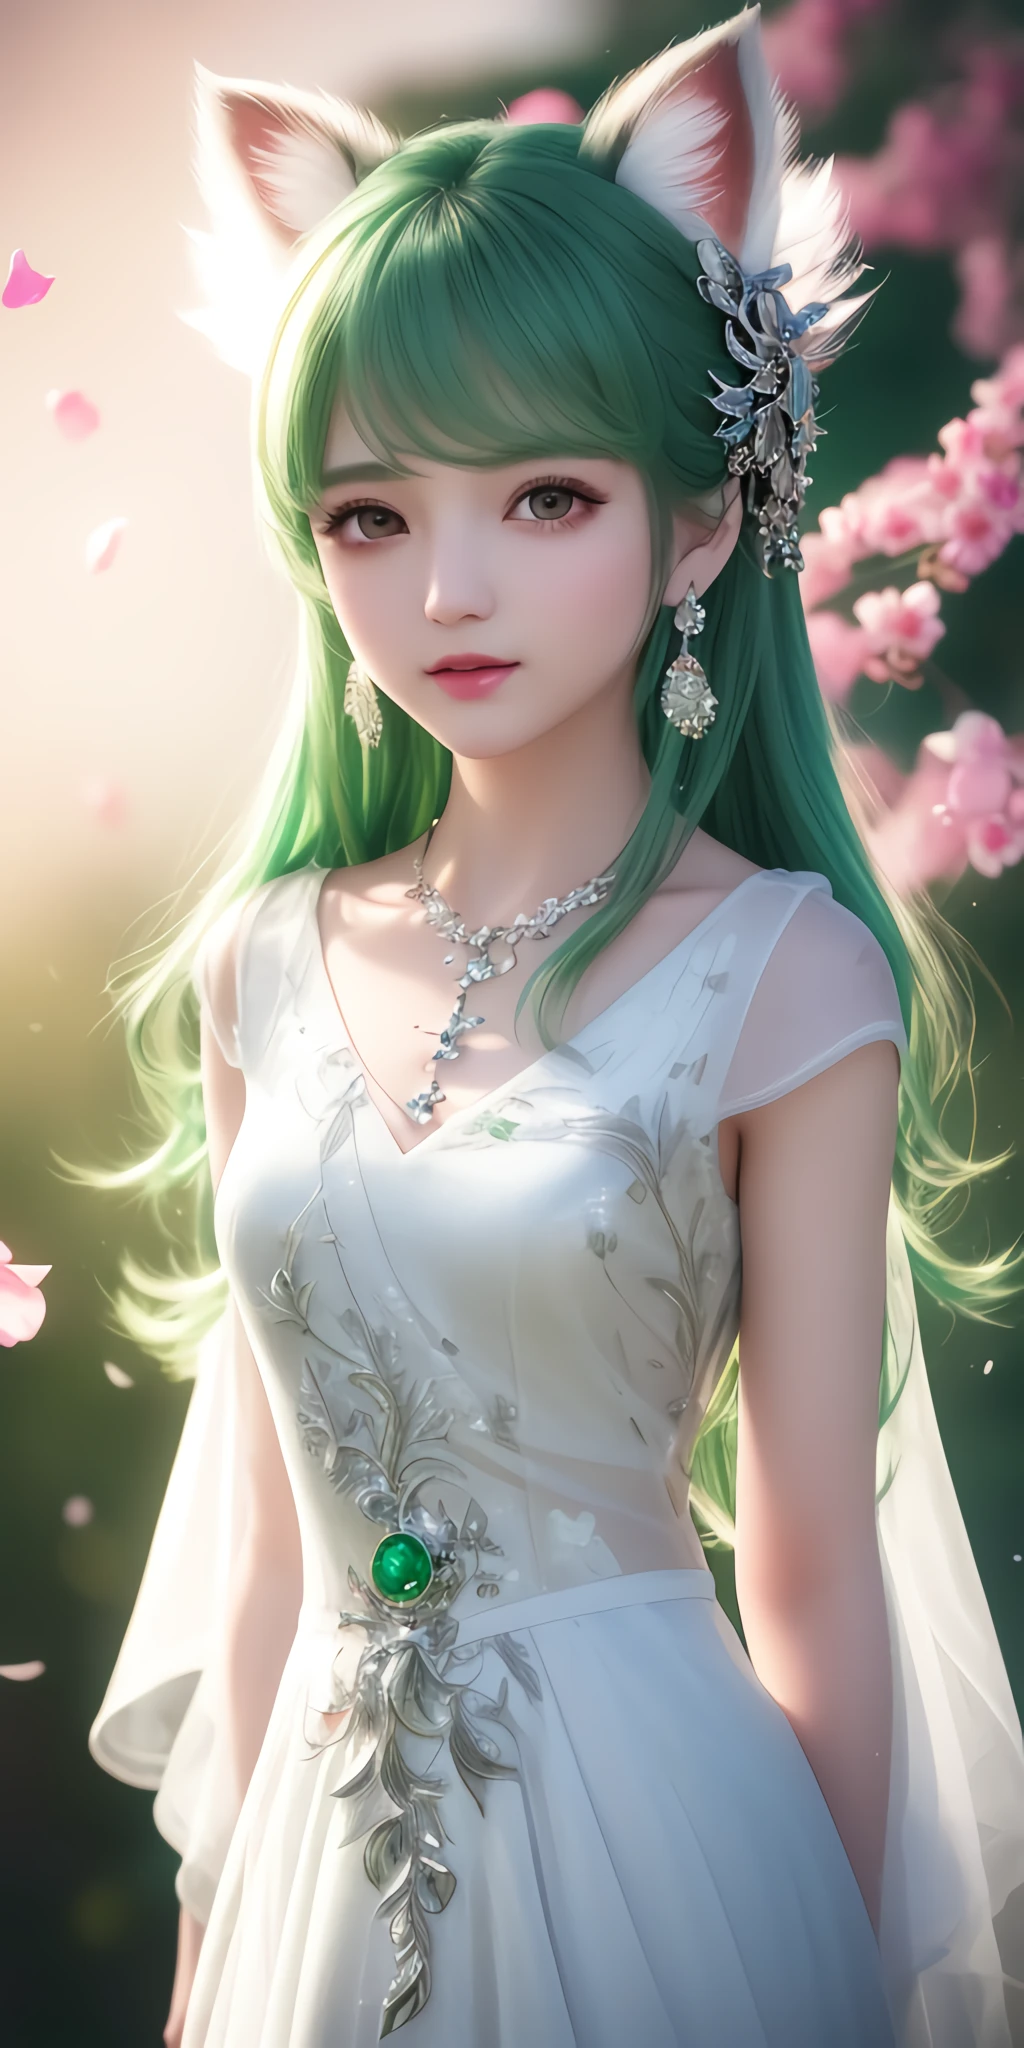 [Cospaly] 绿发美少女coser-Vocaloid – Beautiful Hatsune Miku 套图[99P] - 套图之家 全 ...